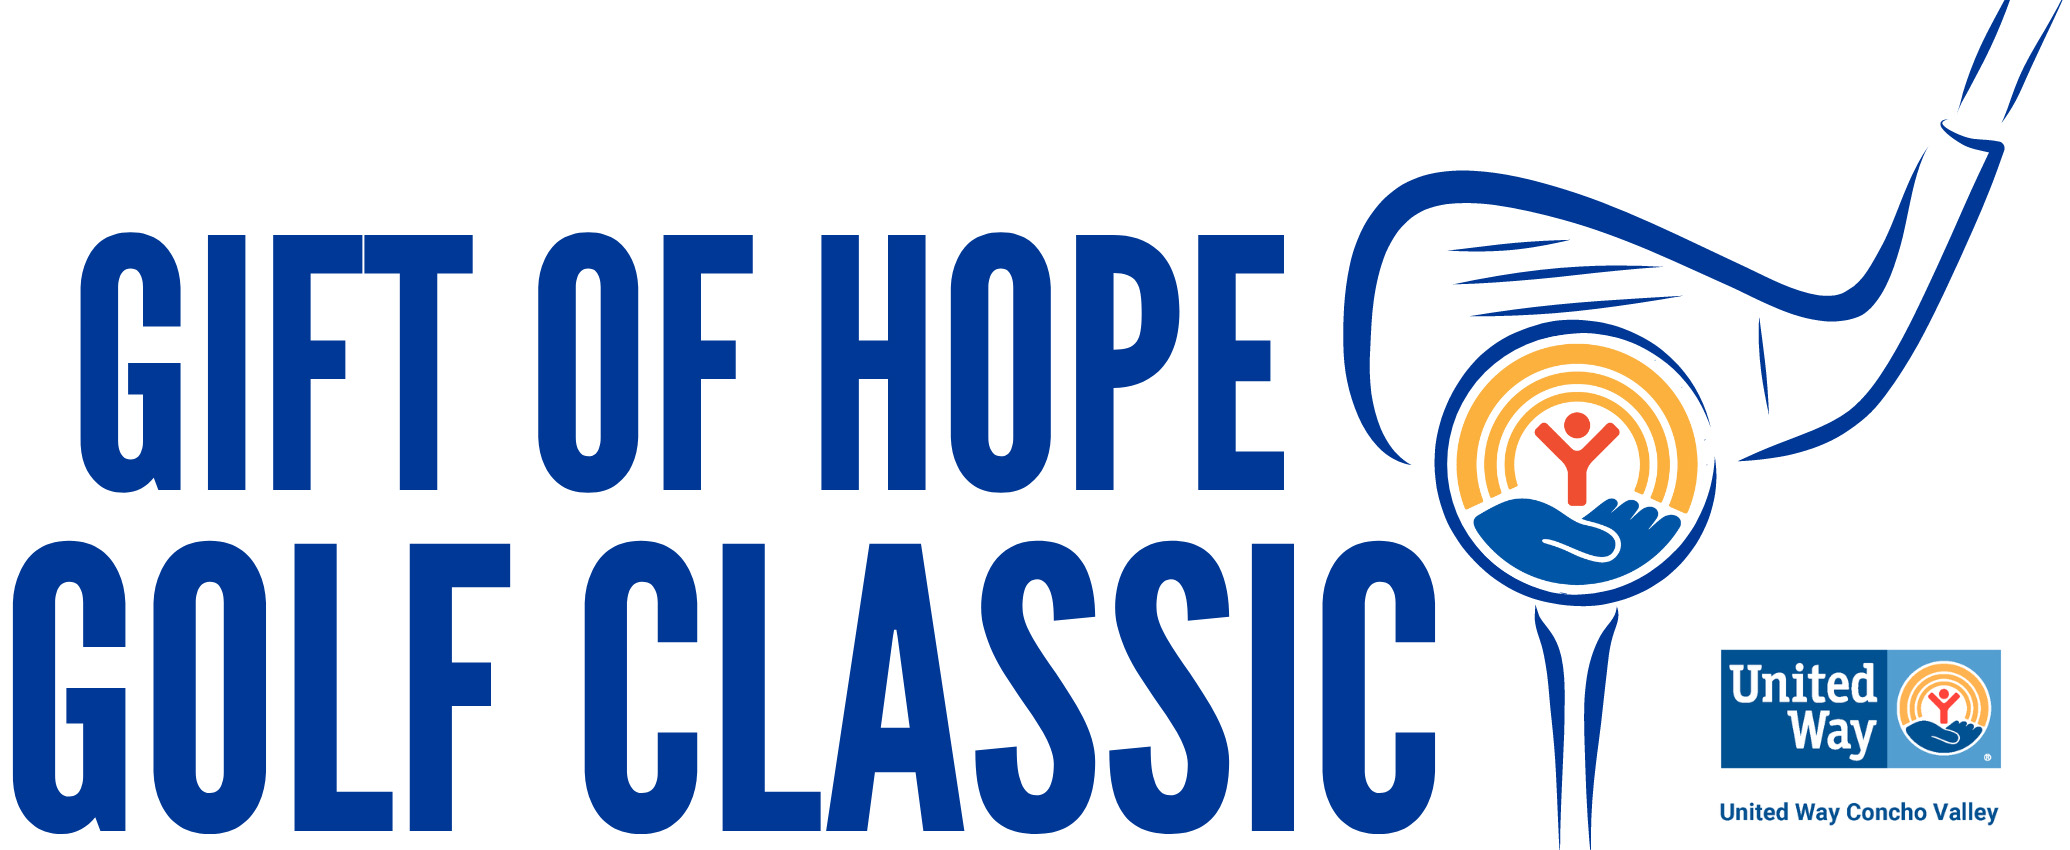 Gift of Hope Golf Classic